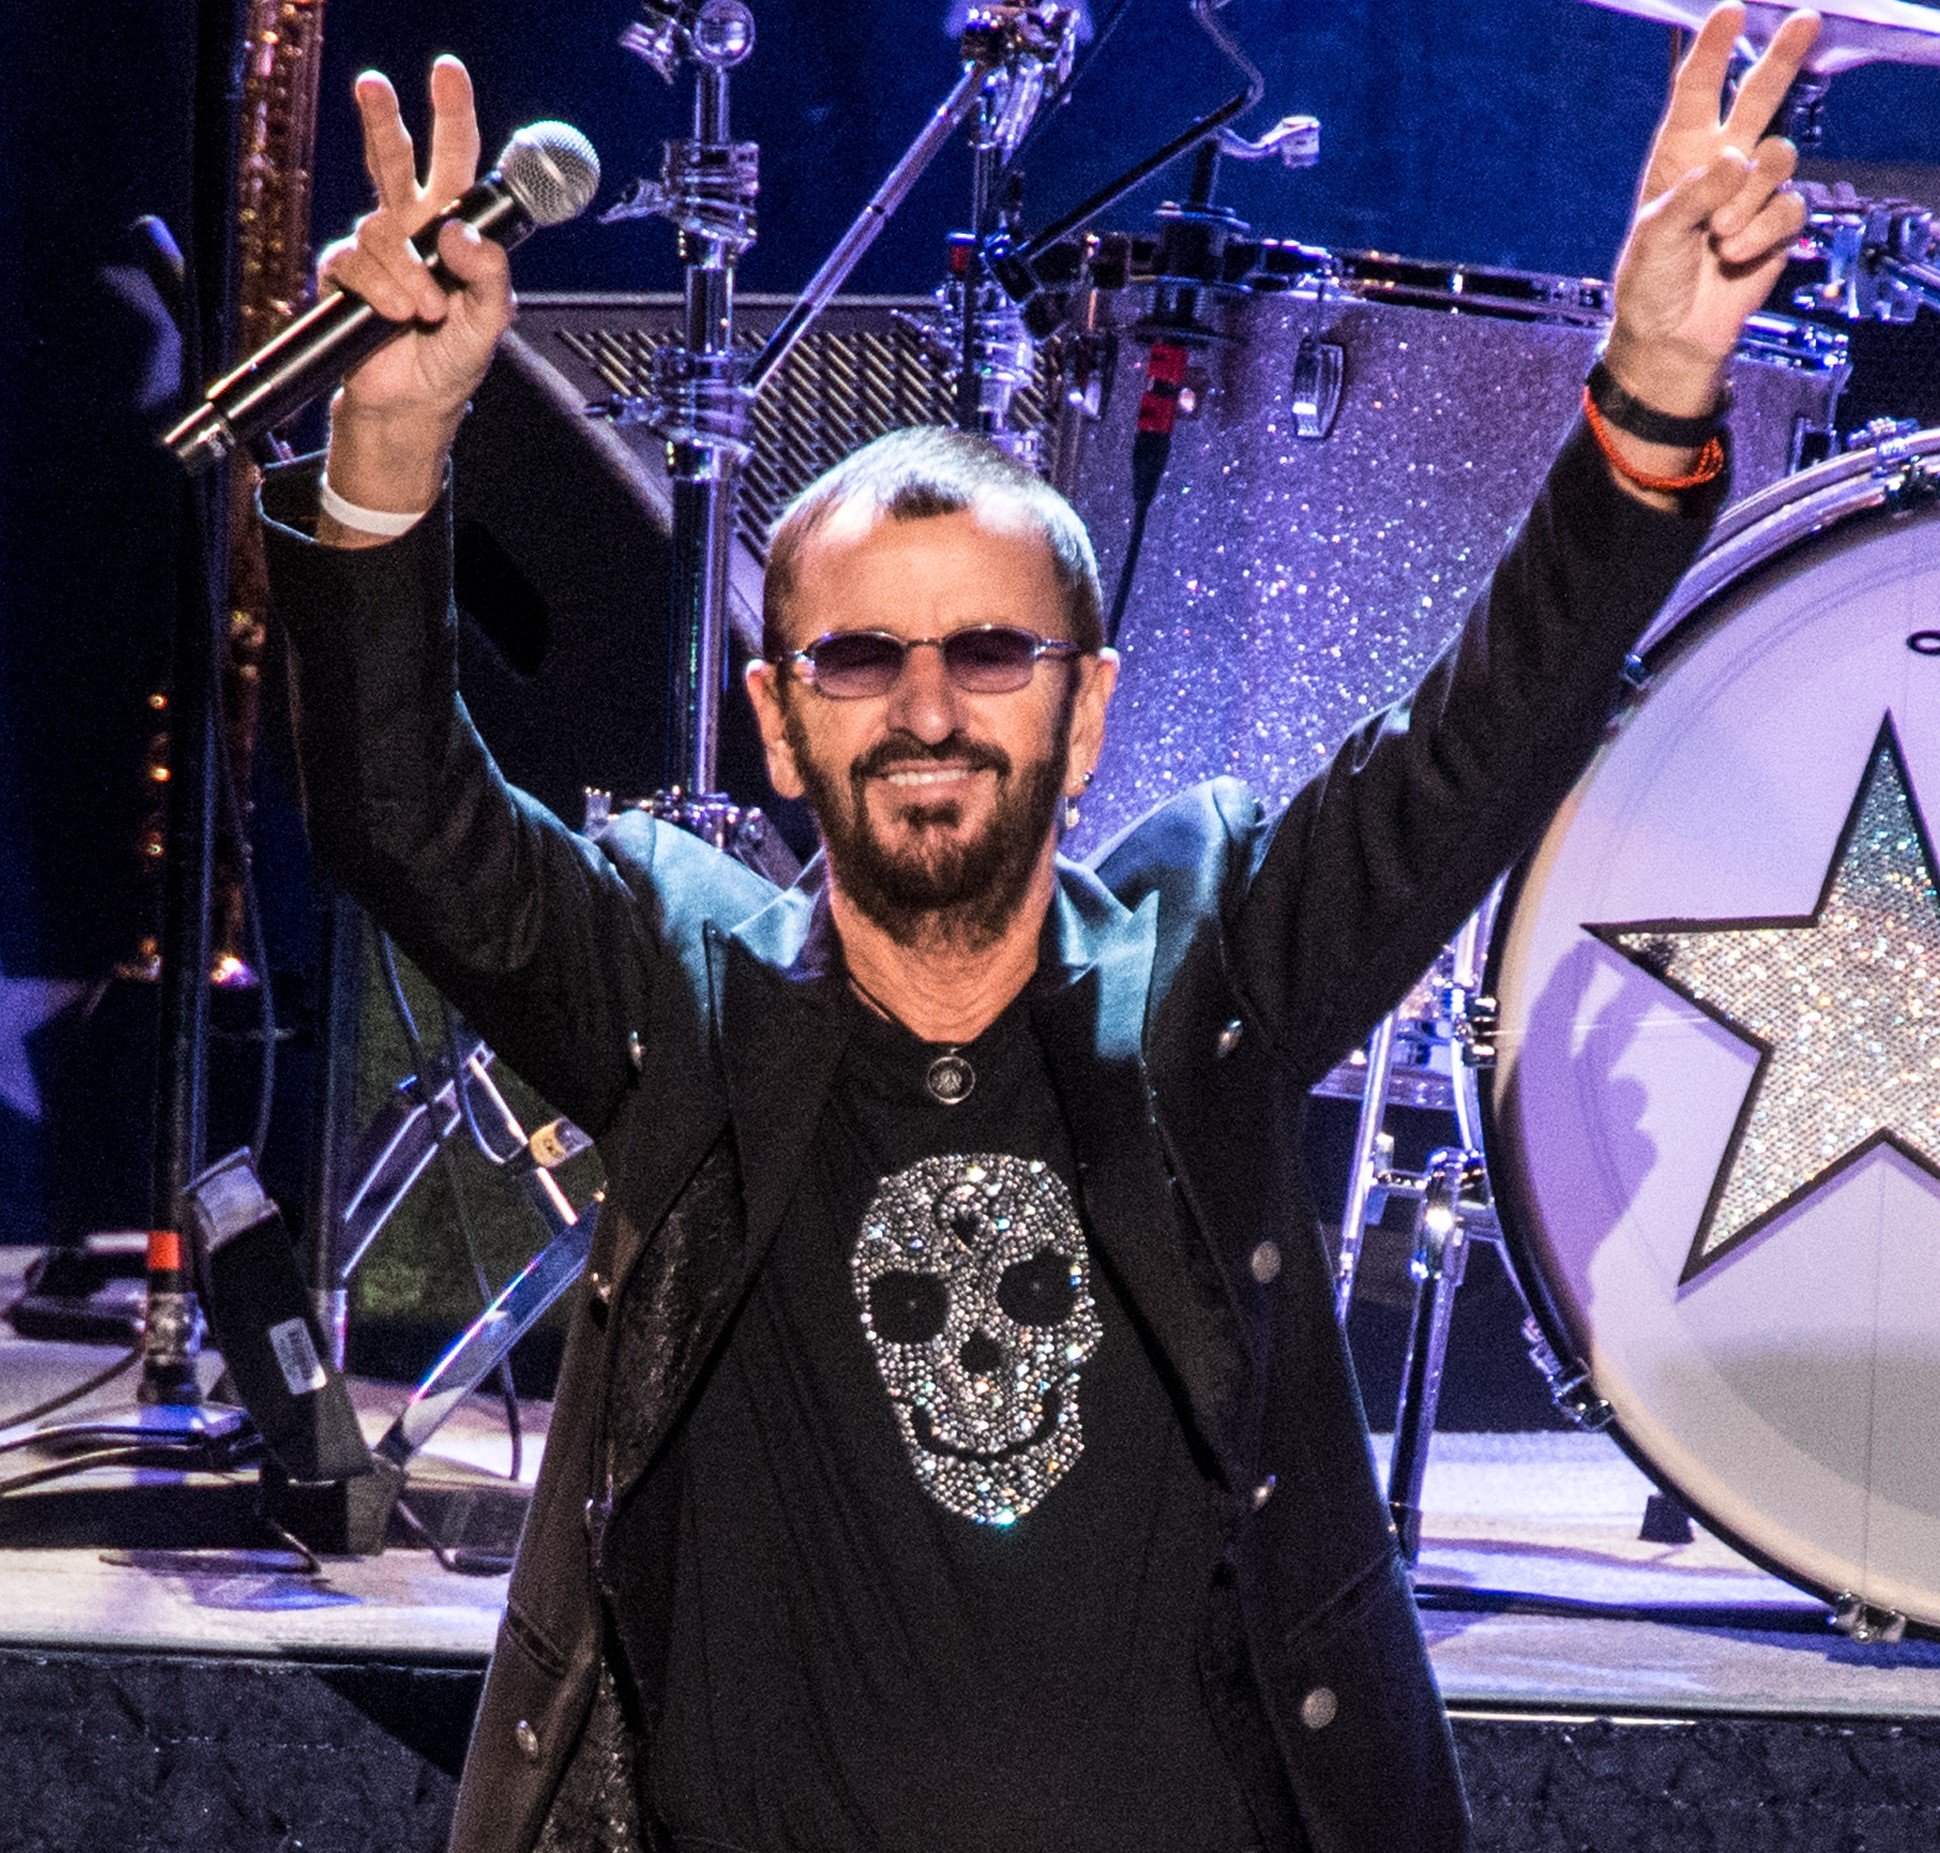 Ringo Starr wearing a skull shirt